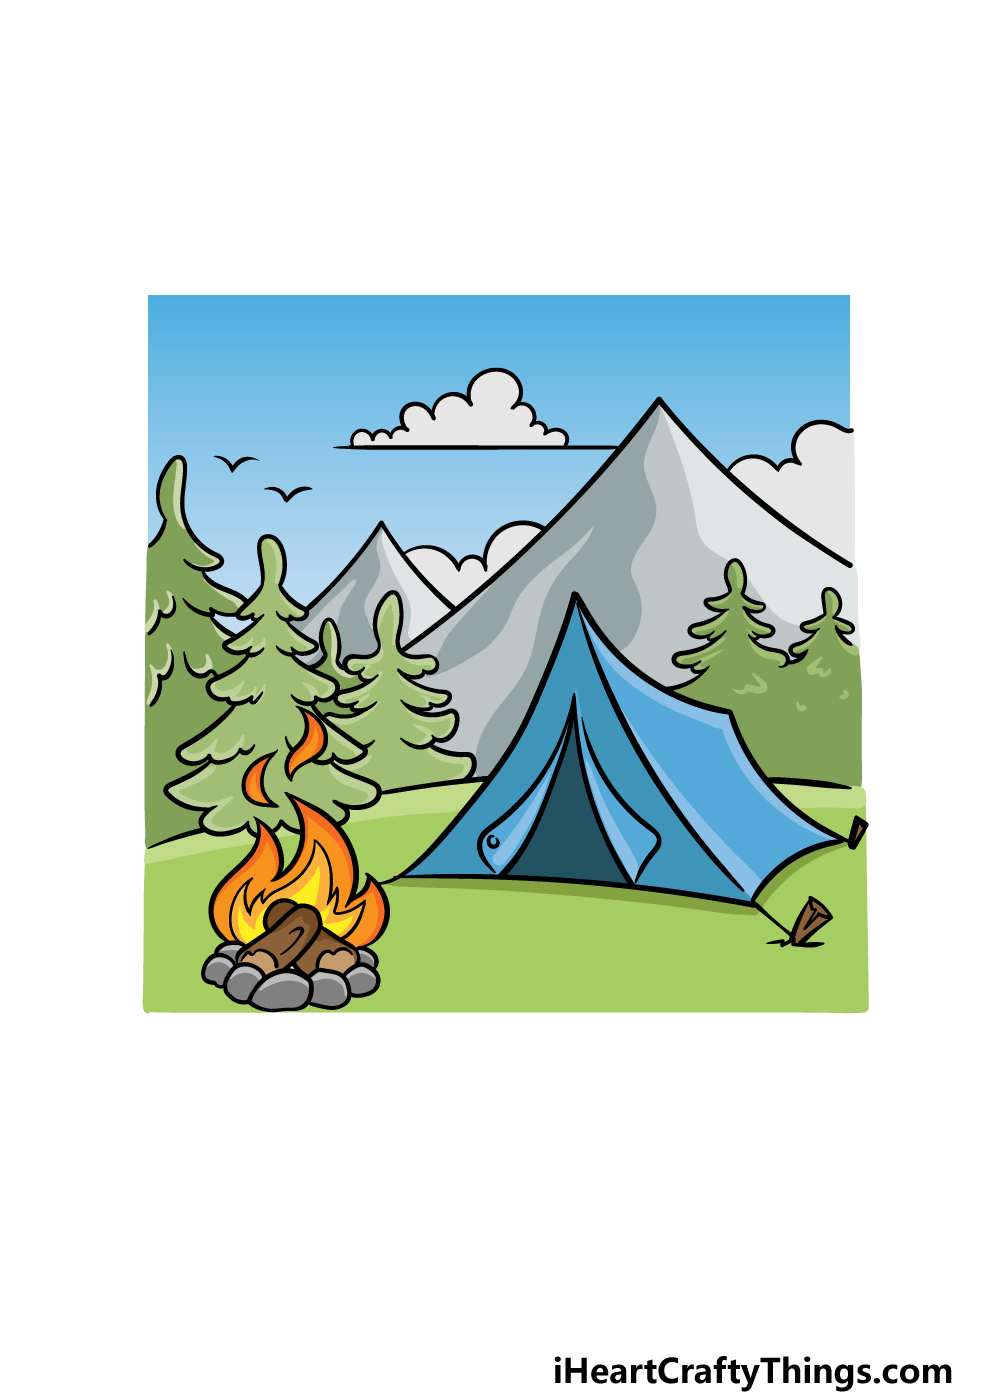 Prep Camping Gear in 5 Easy Steps